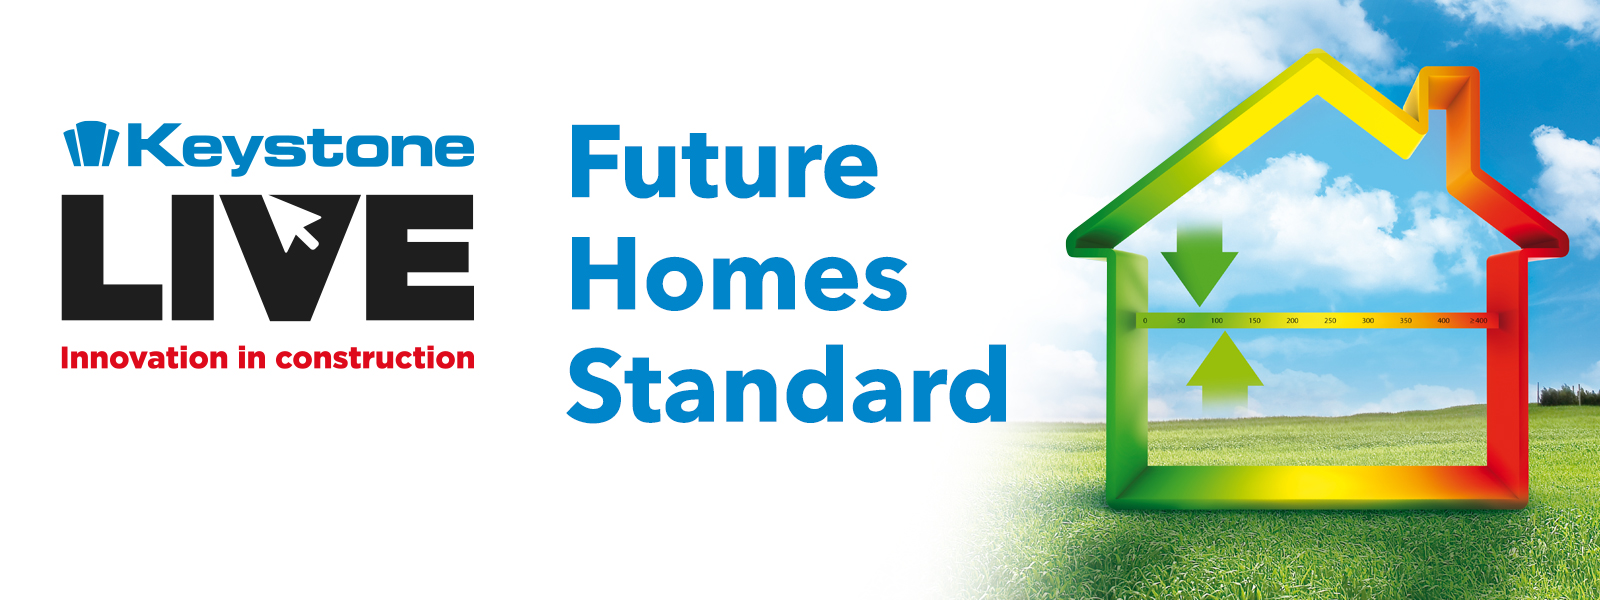 Keystone to host Future Homes Standard webinar debate